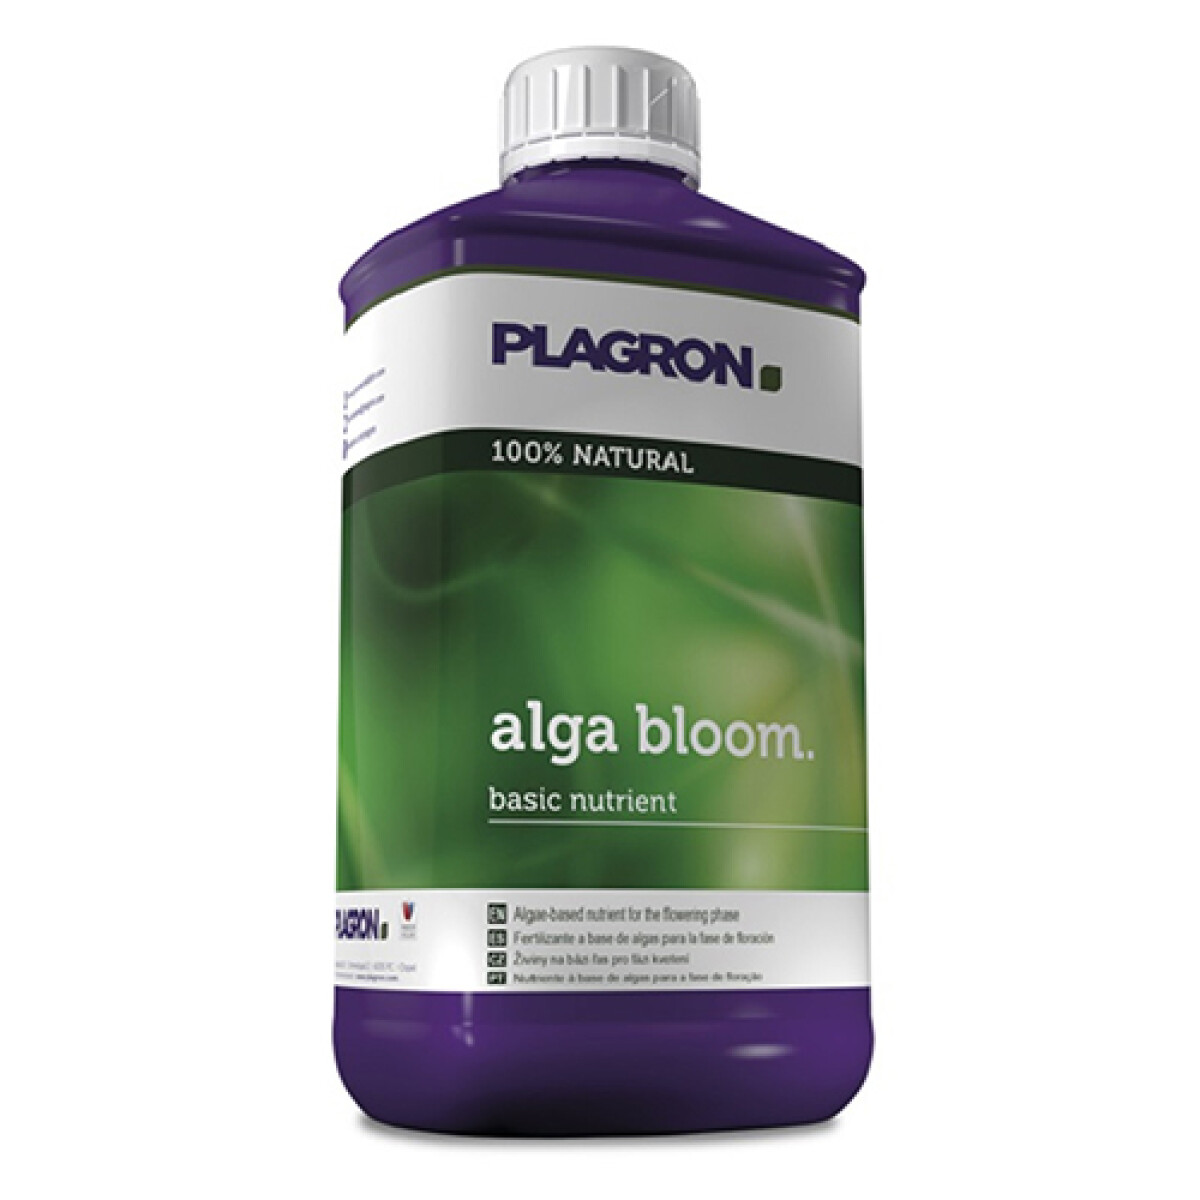 ALGA BLOOM PLAGRON - 500ML 